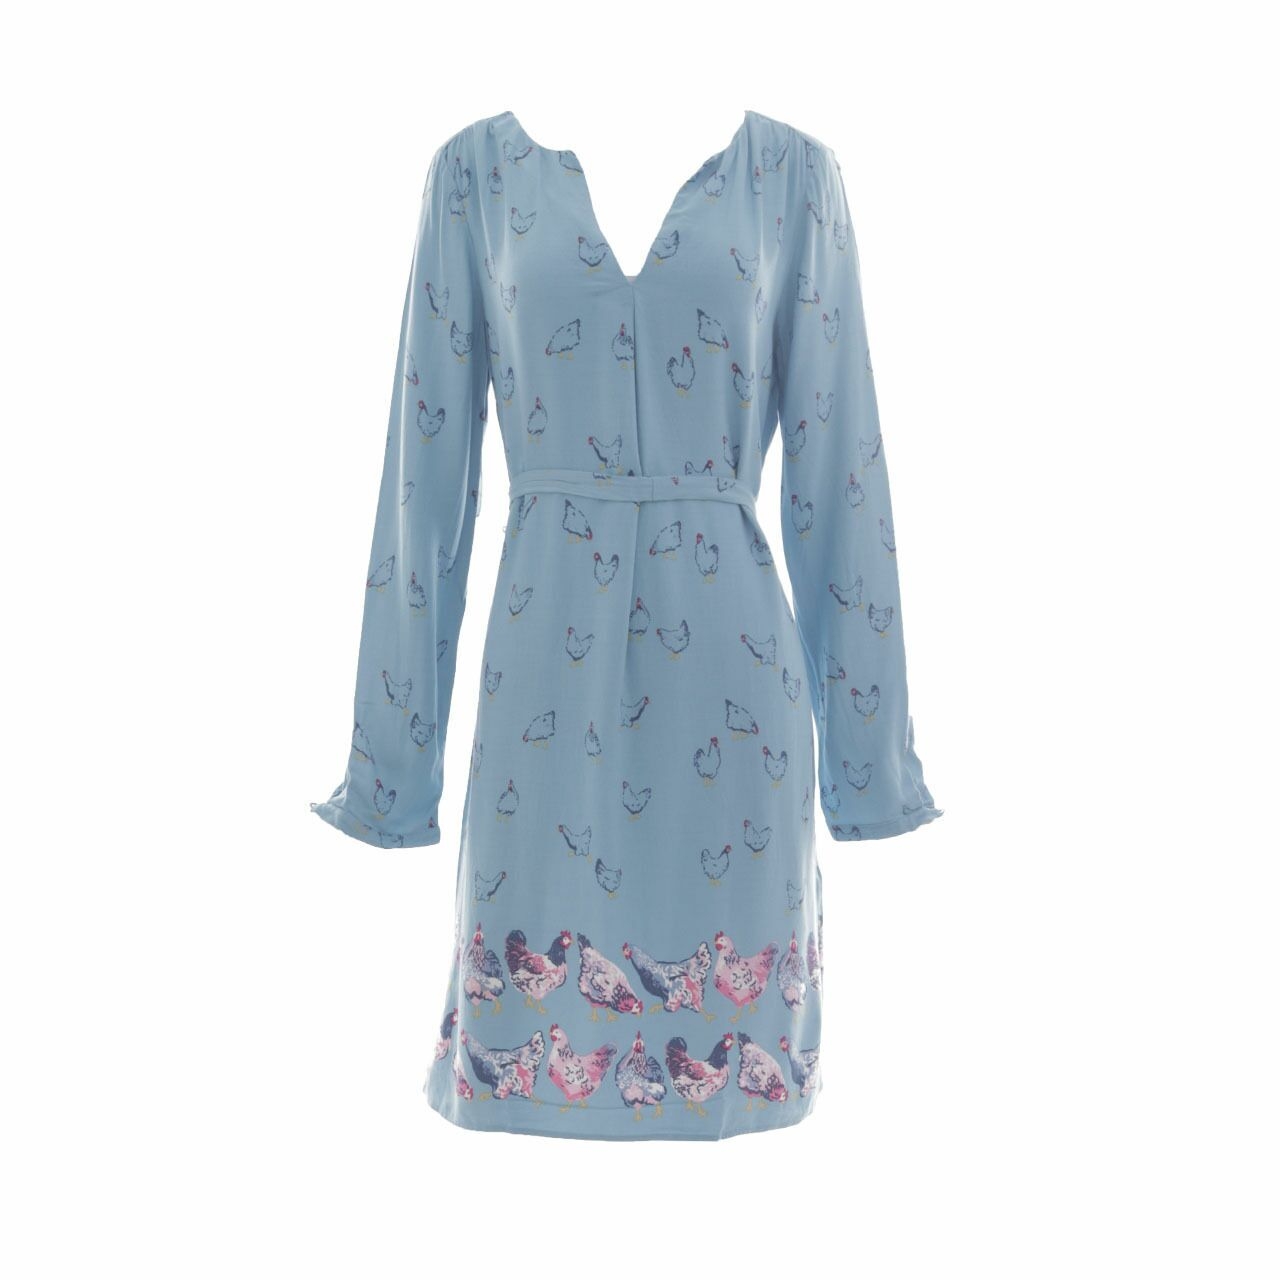 Cath Kidston Blue Chicken Patterned Mini Dress